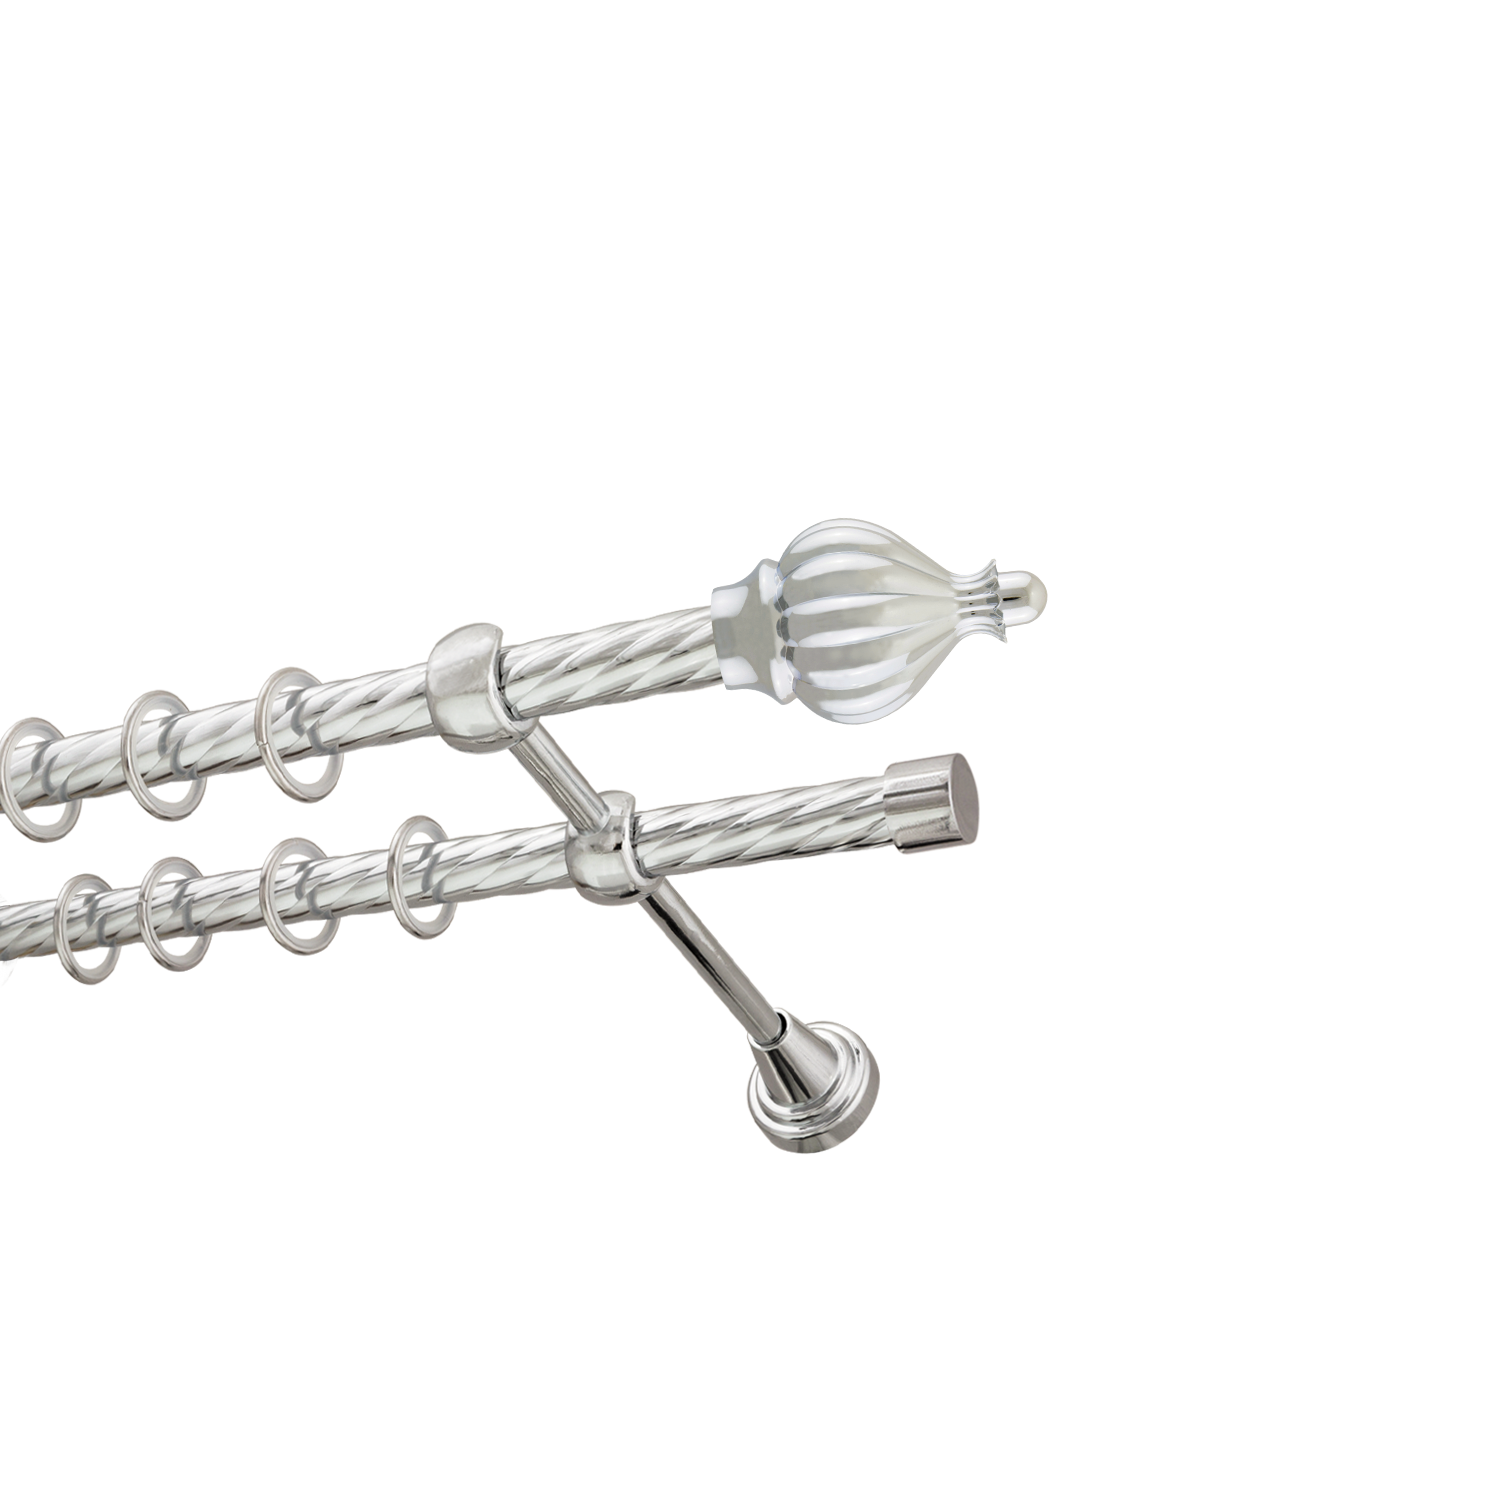 Металлический карниз для штор Афродита, двухрядный 16/16 мм, серебро, витая штанга, длина 200 см - фото Wikidecor.ru